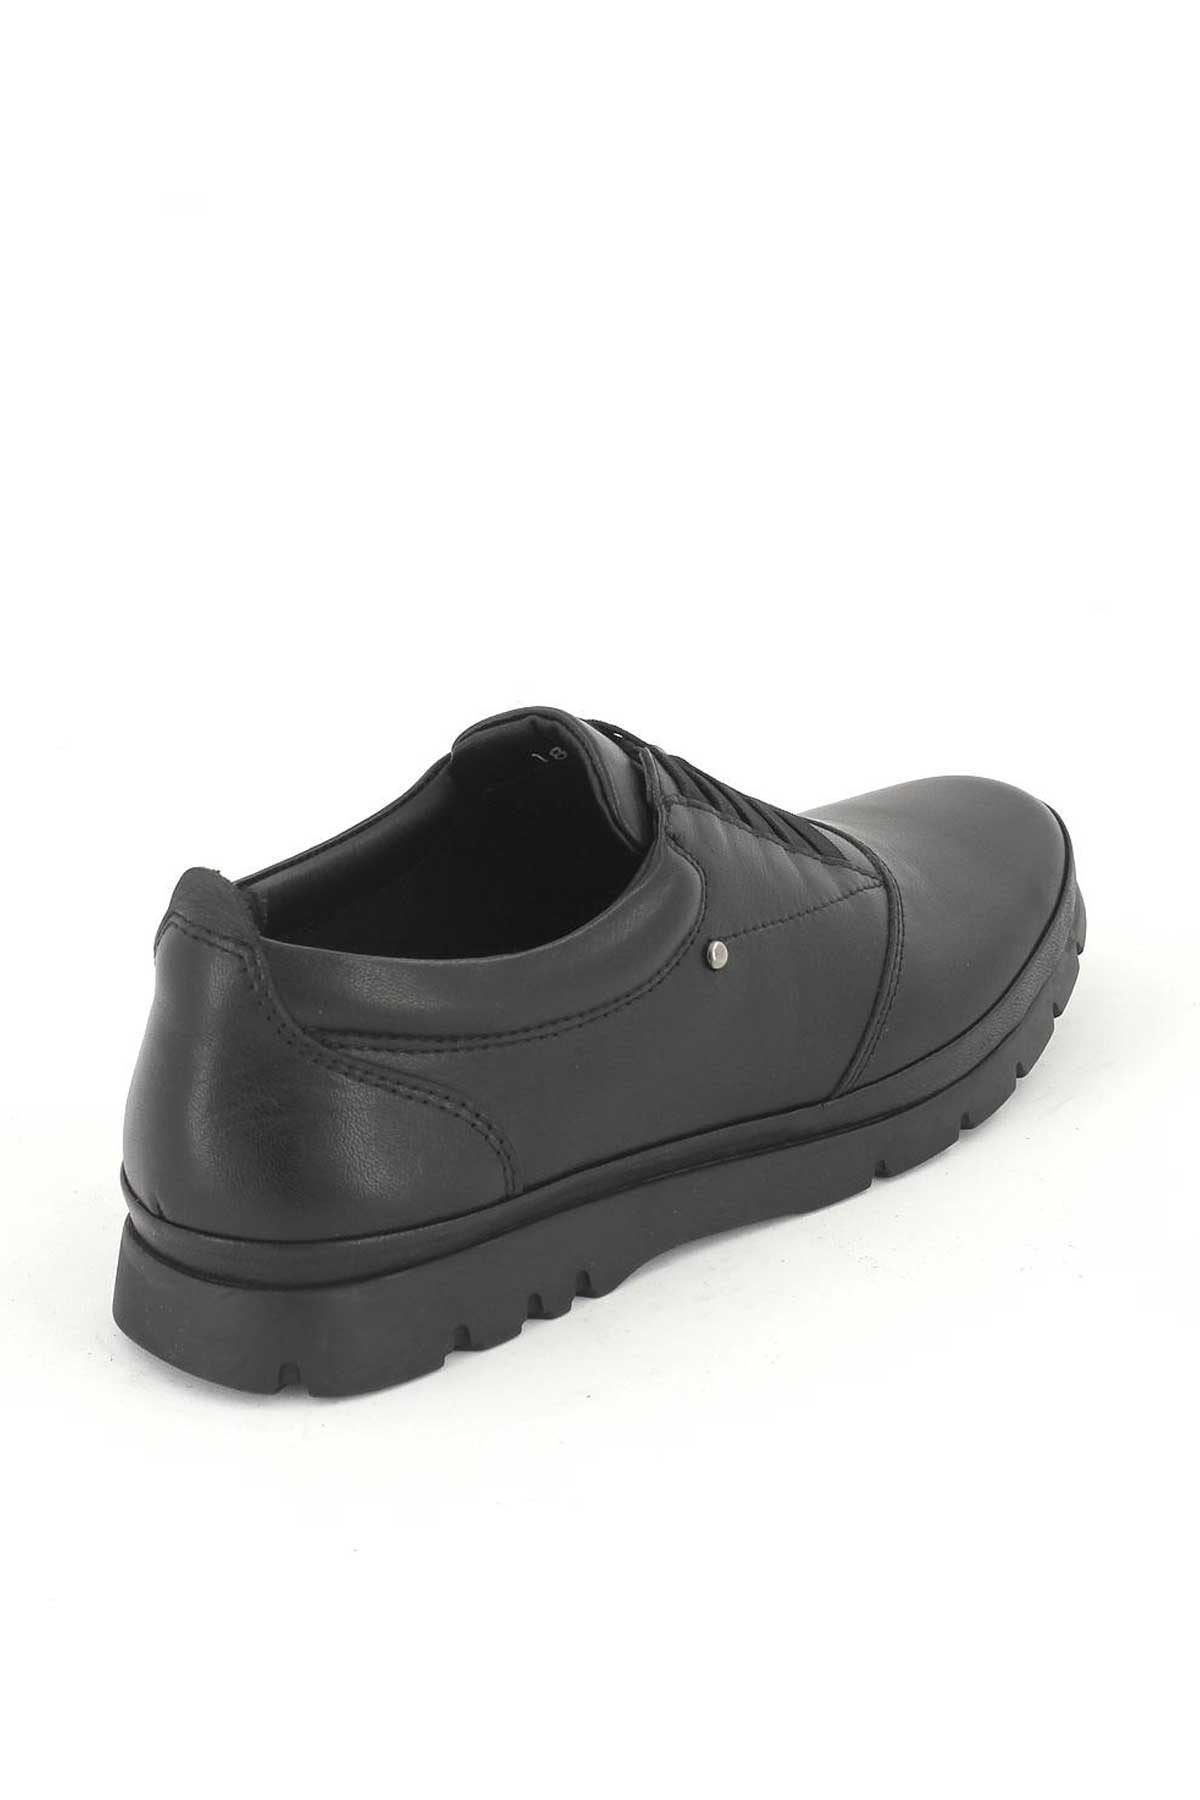 Kadın Comfort Ayakkabı Siyah 1813650K - Thumbnail